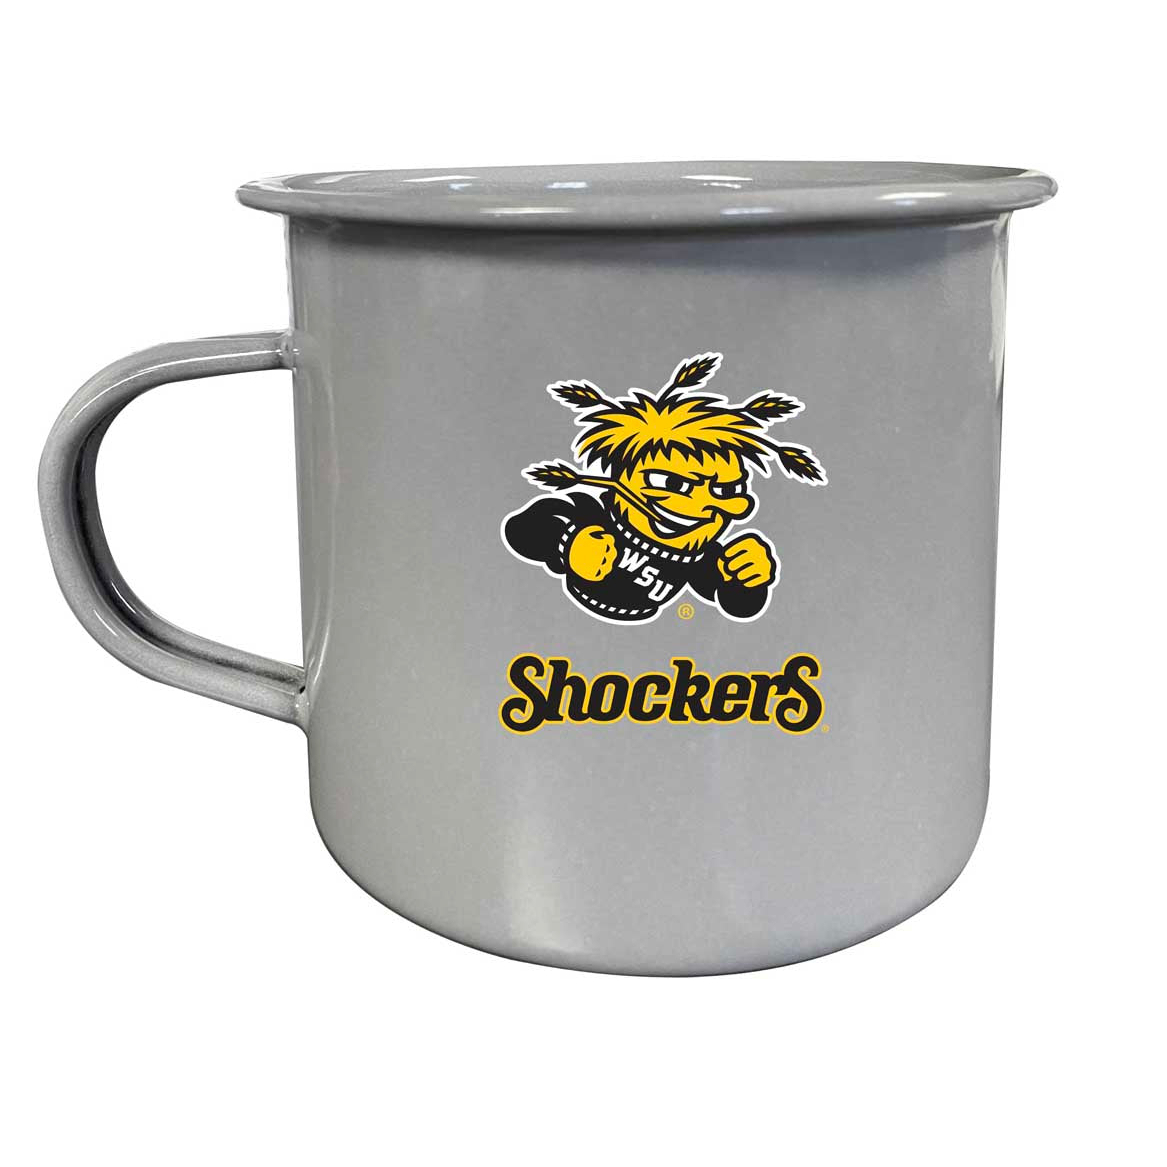 Wichita State Shockers Tin Camper Coffee Mug - Choose Your Color - Gray